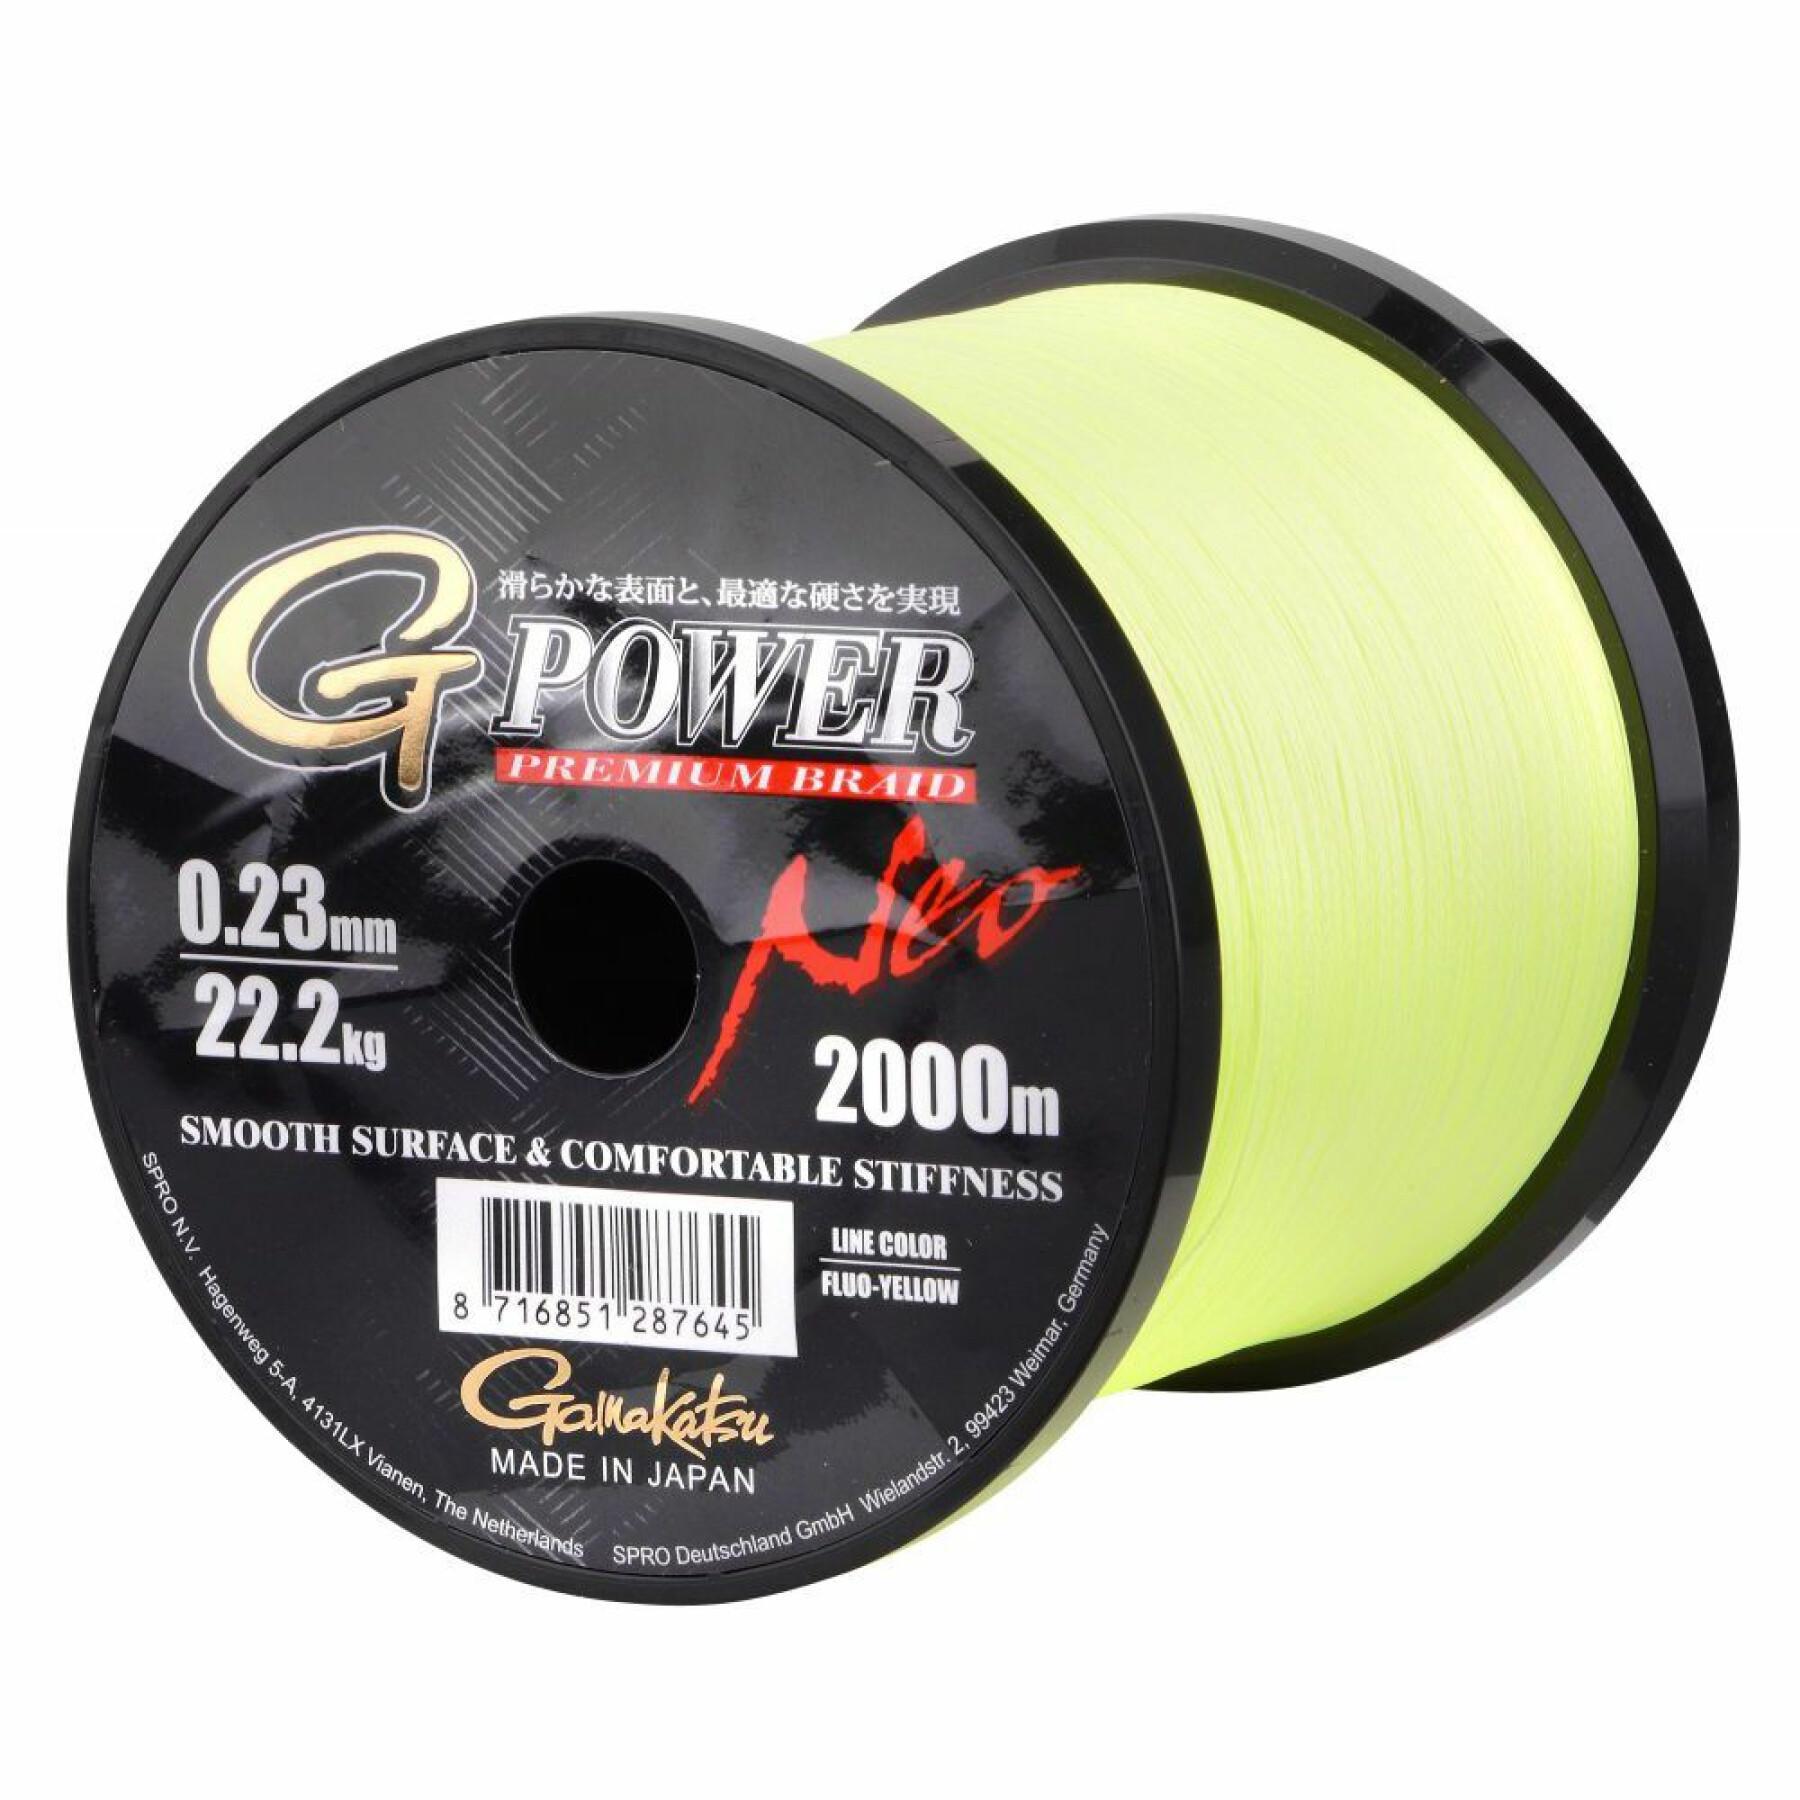 Warkocz Gamakatsu G-Power Yellow PR 2000m